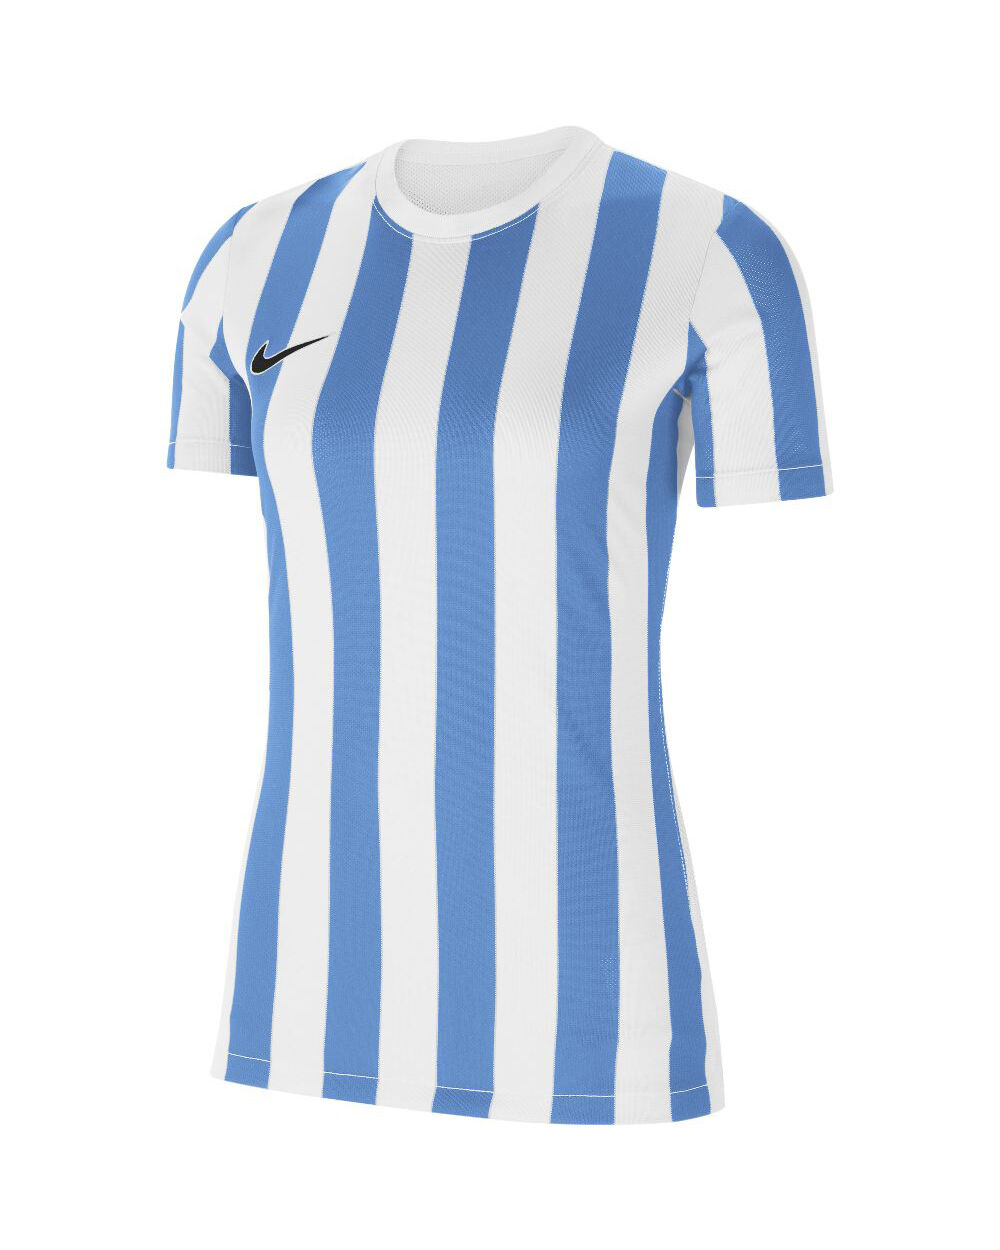 Camiseta Nike Striped Division IV Blanco y Azul Cielo para Mujeres - CW3816-103